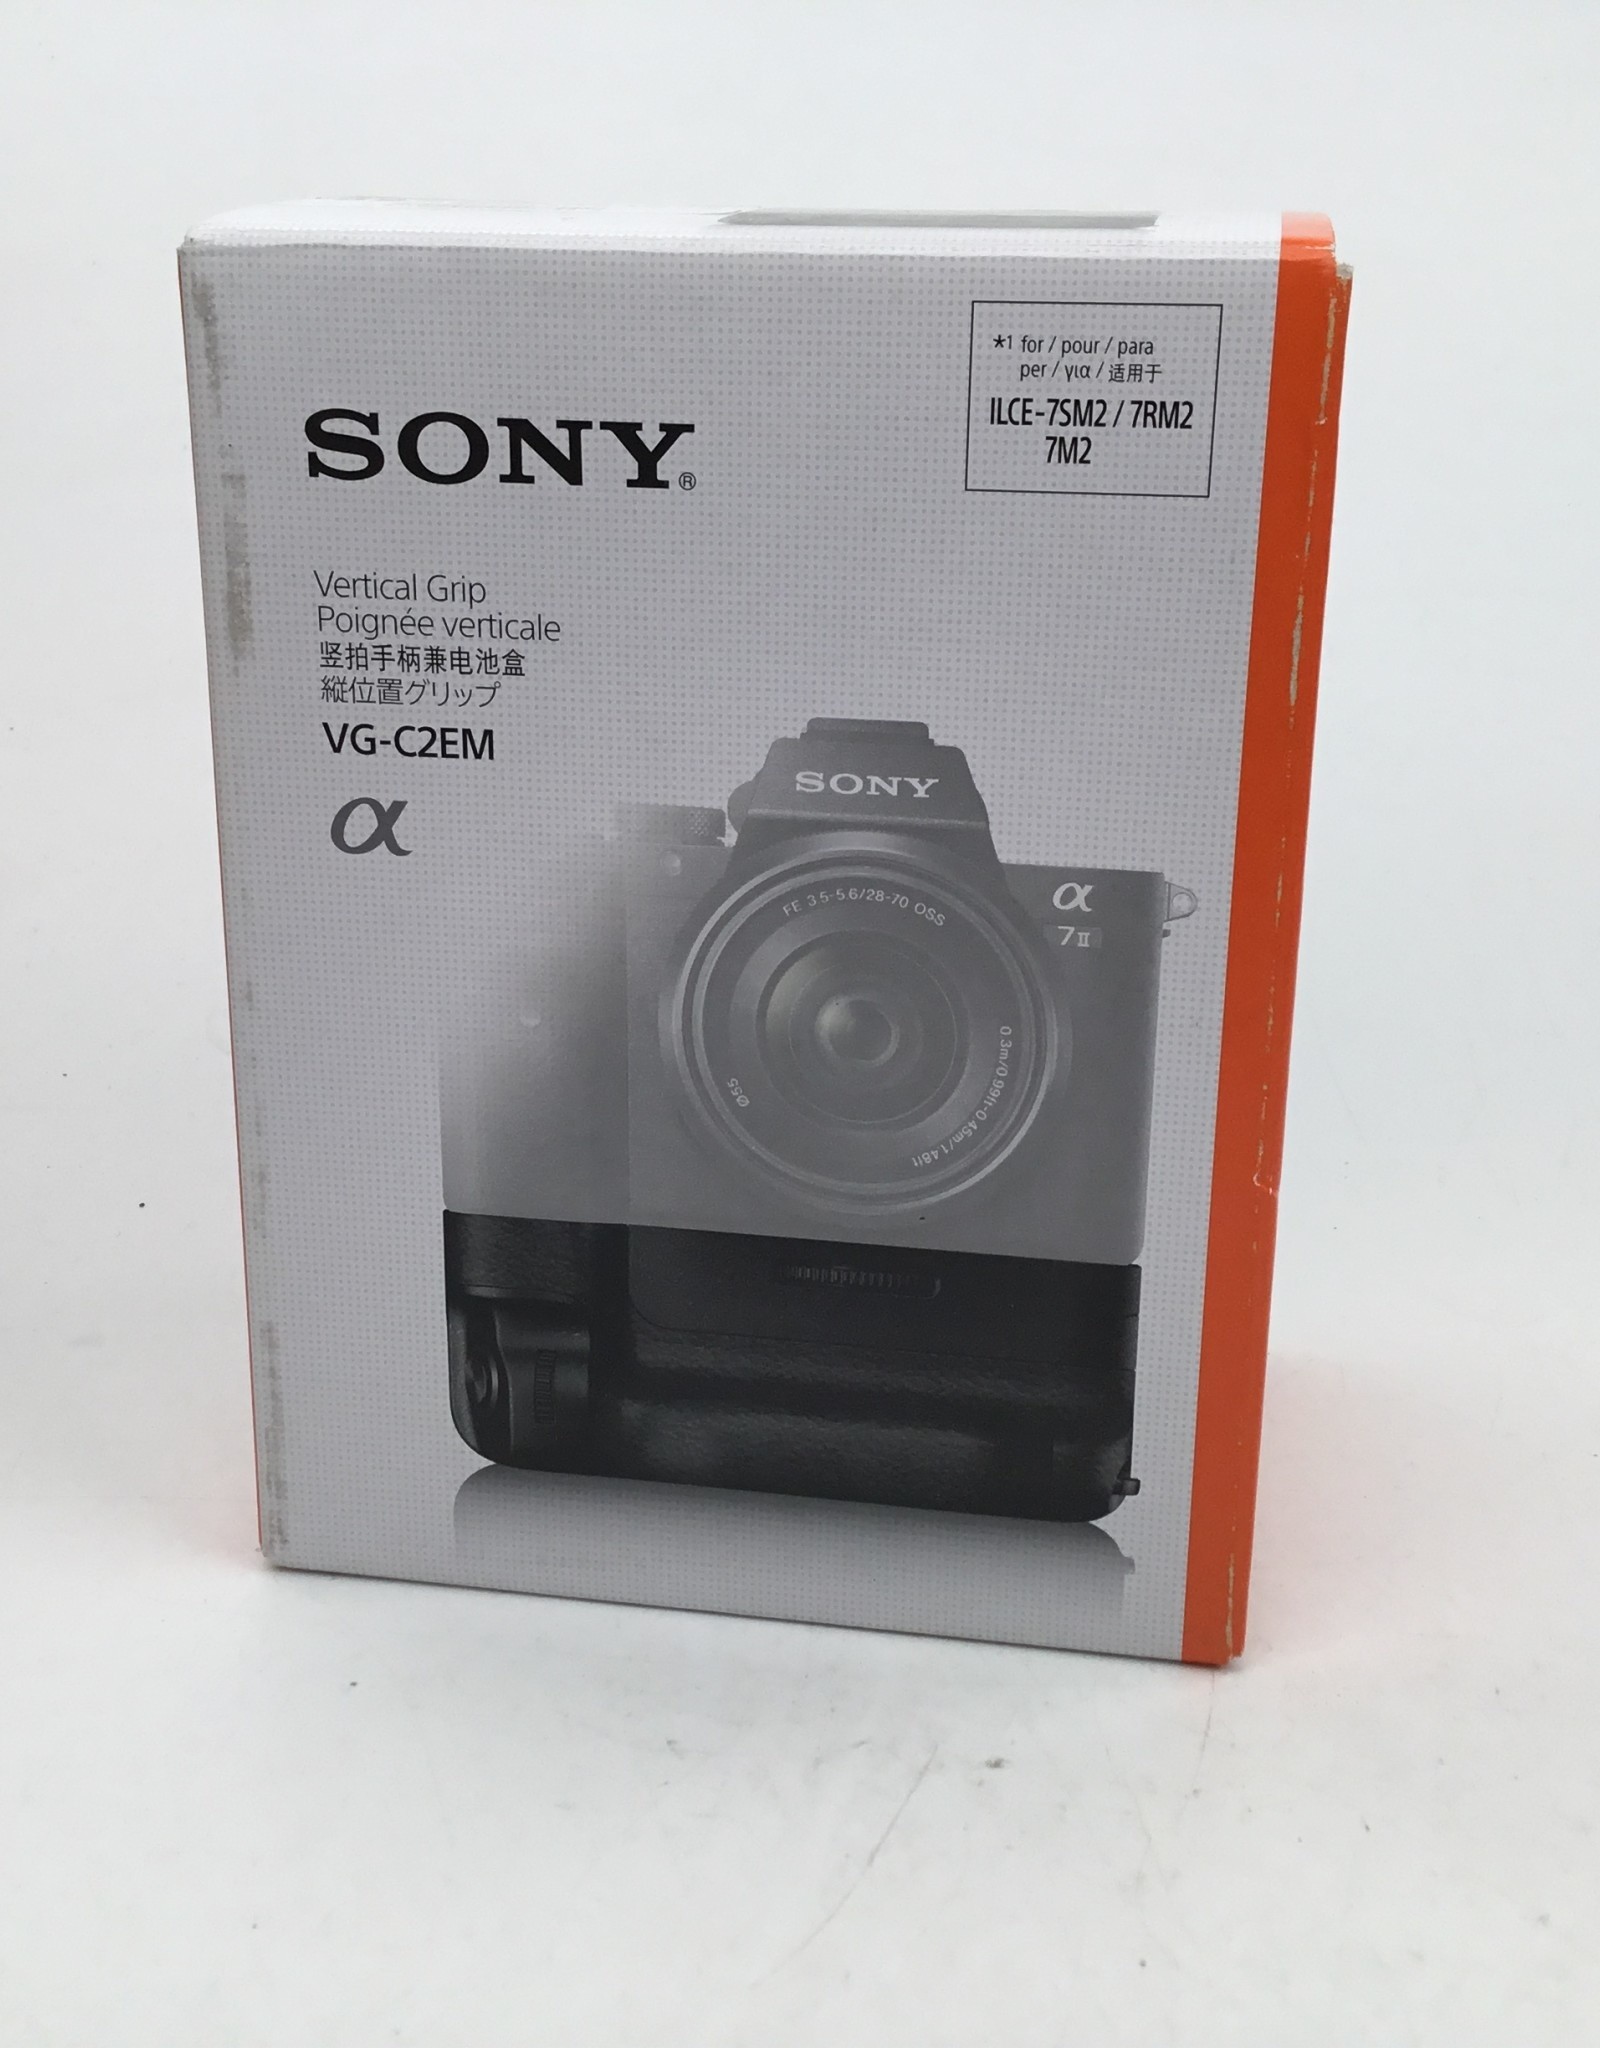 SONY Sony VG-C2EM Vertical Grip for A7S II, A7R II in Box Used LN